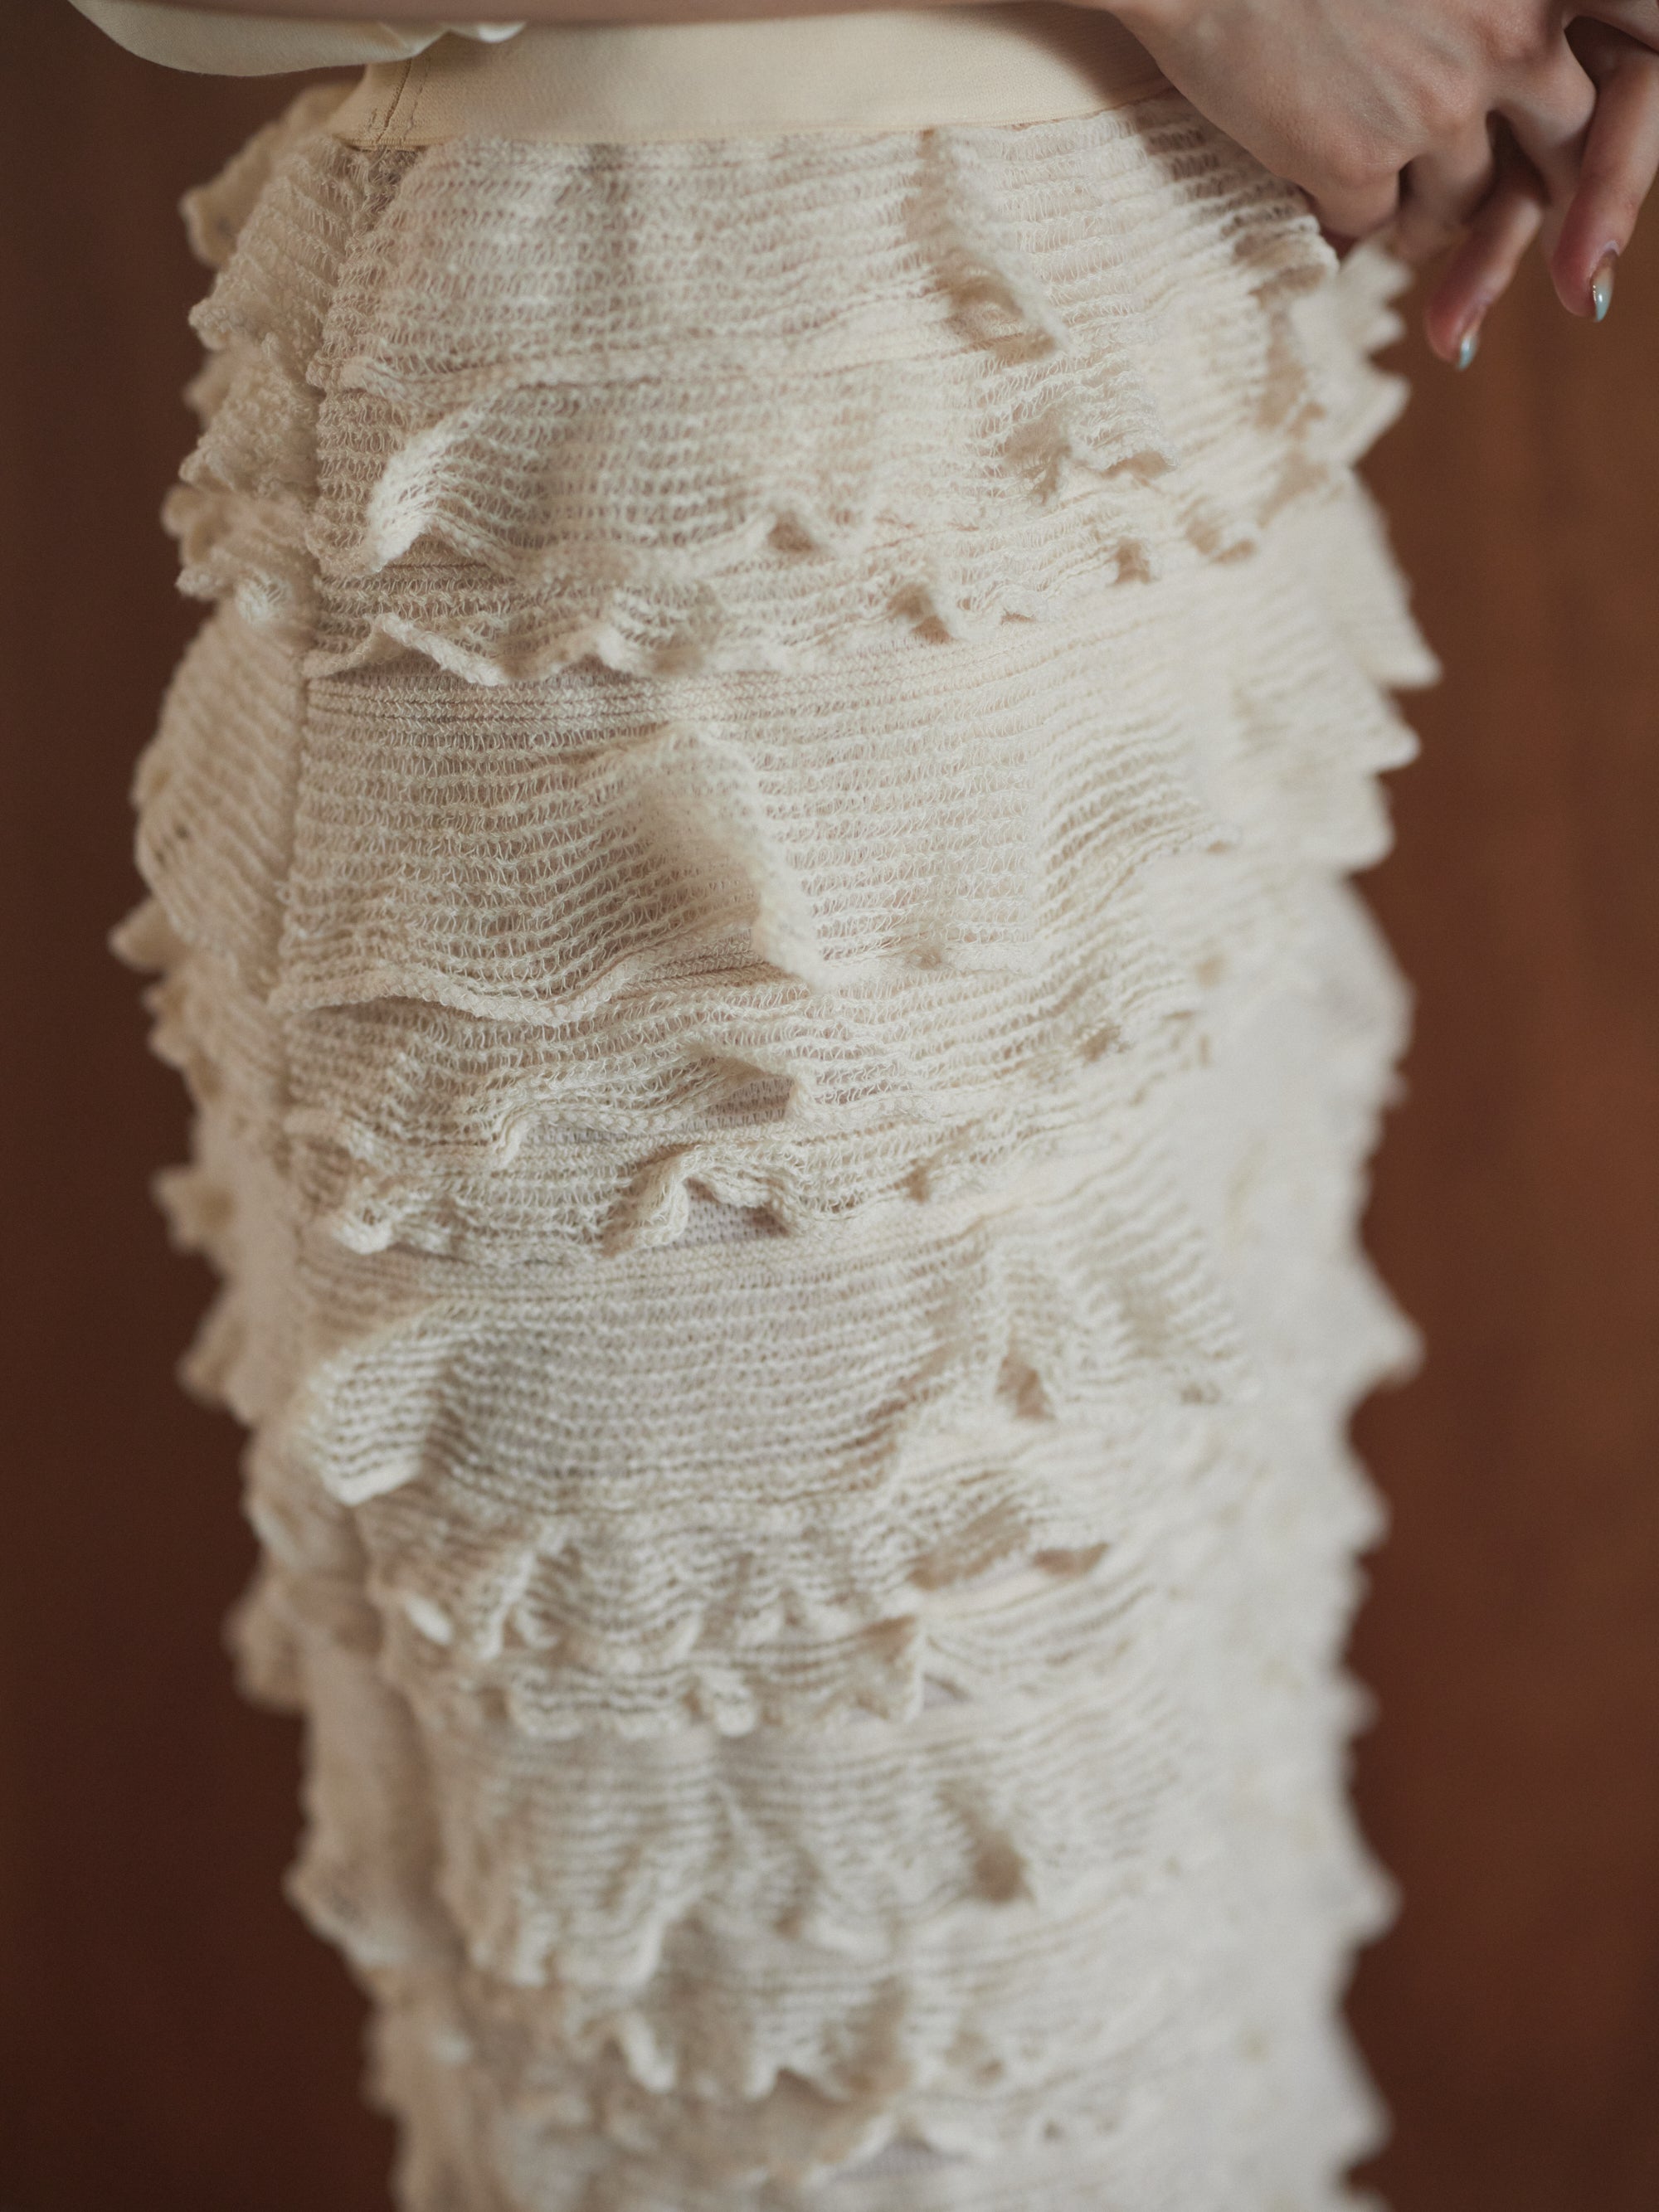 Frills lace skirt